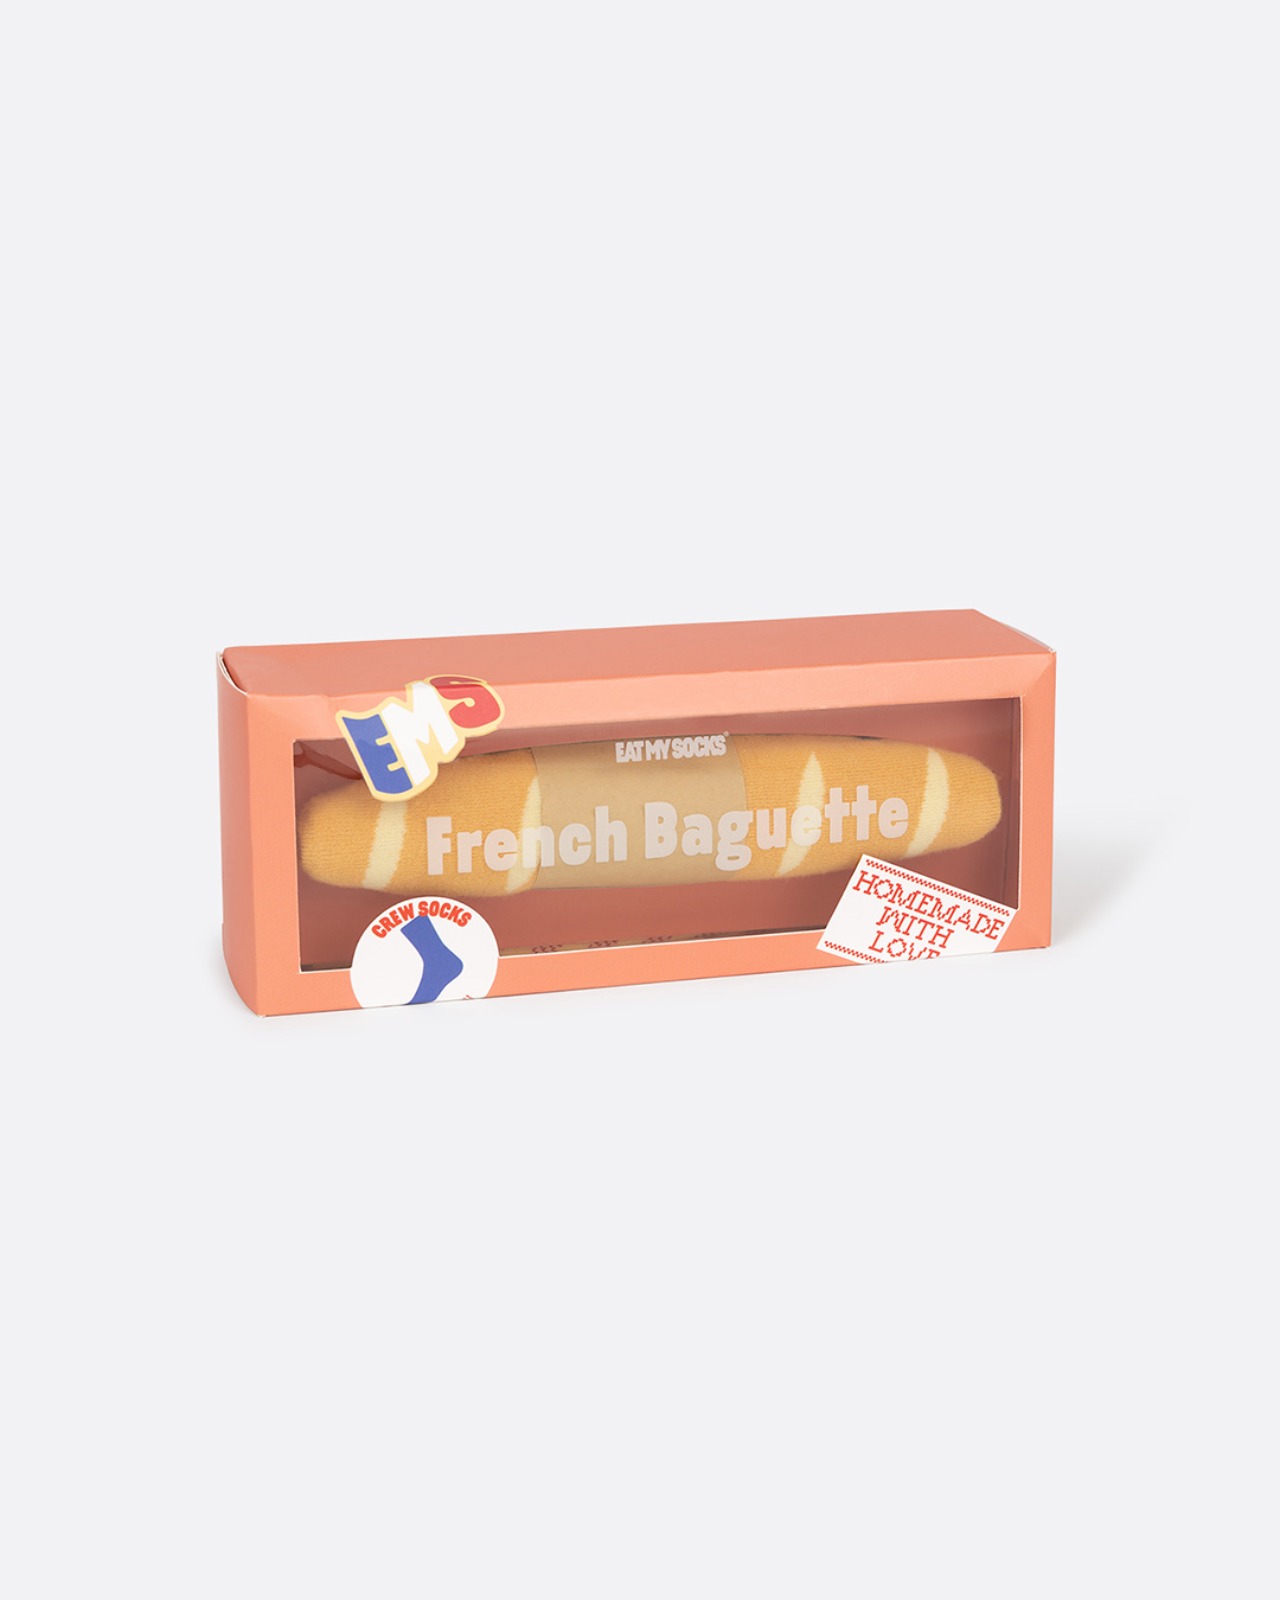 [EAT MY SOCKS] French Baguette